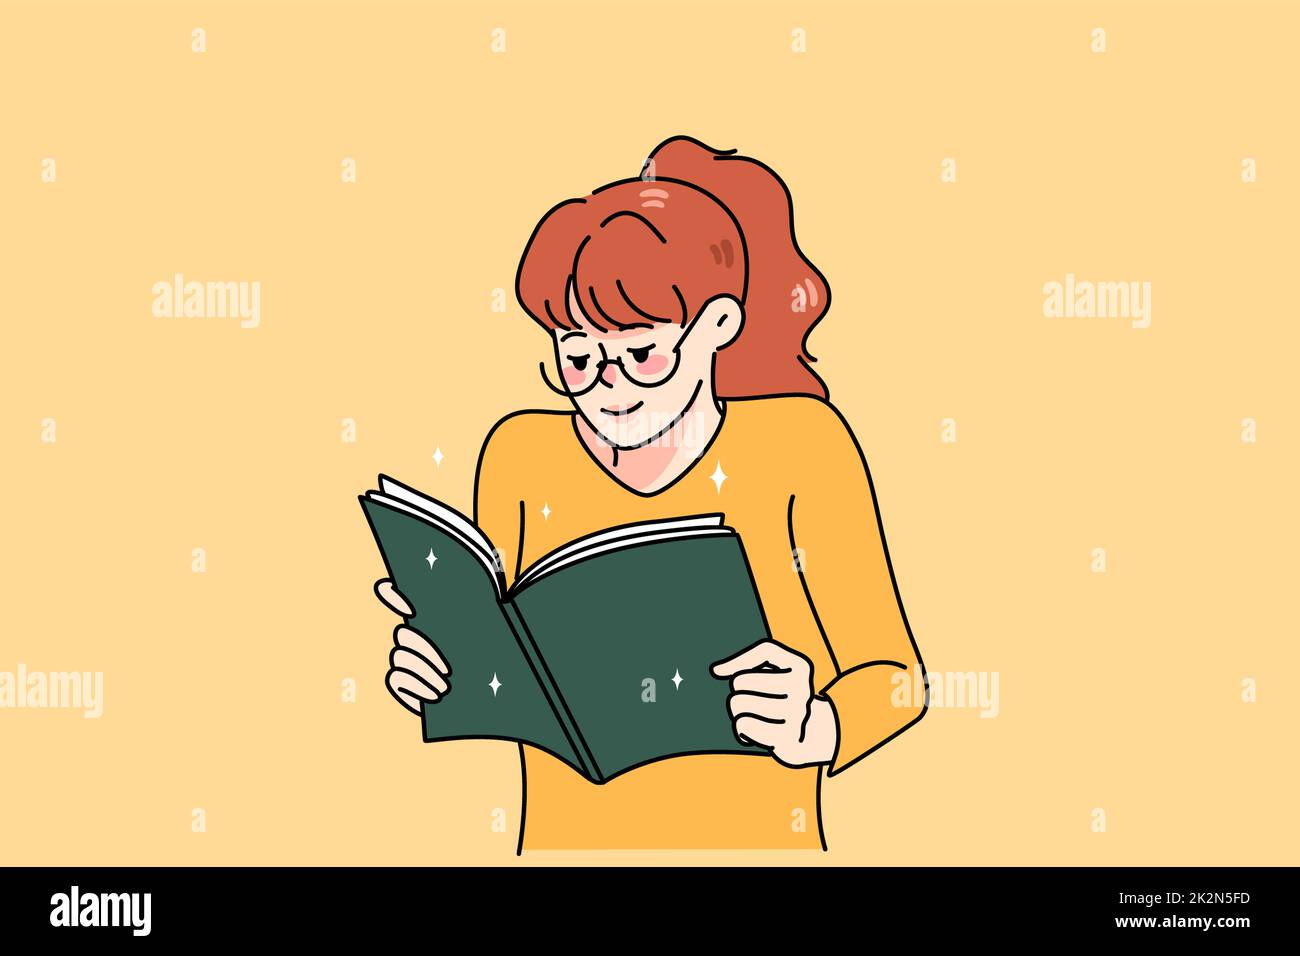 Happy girl reading book Stock Photo